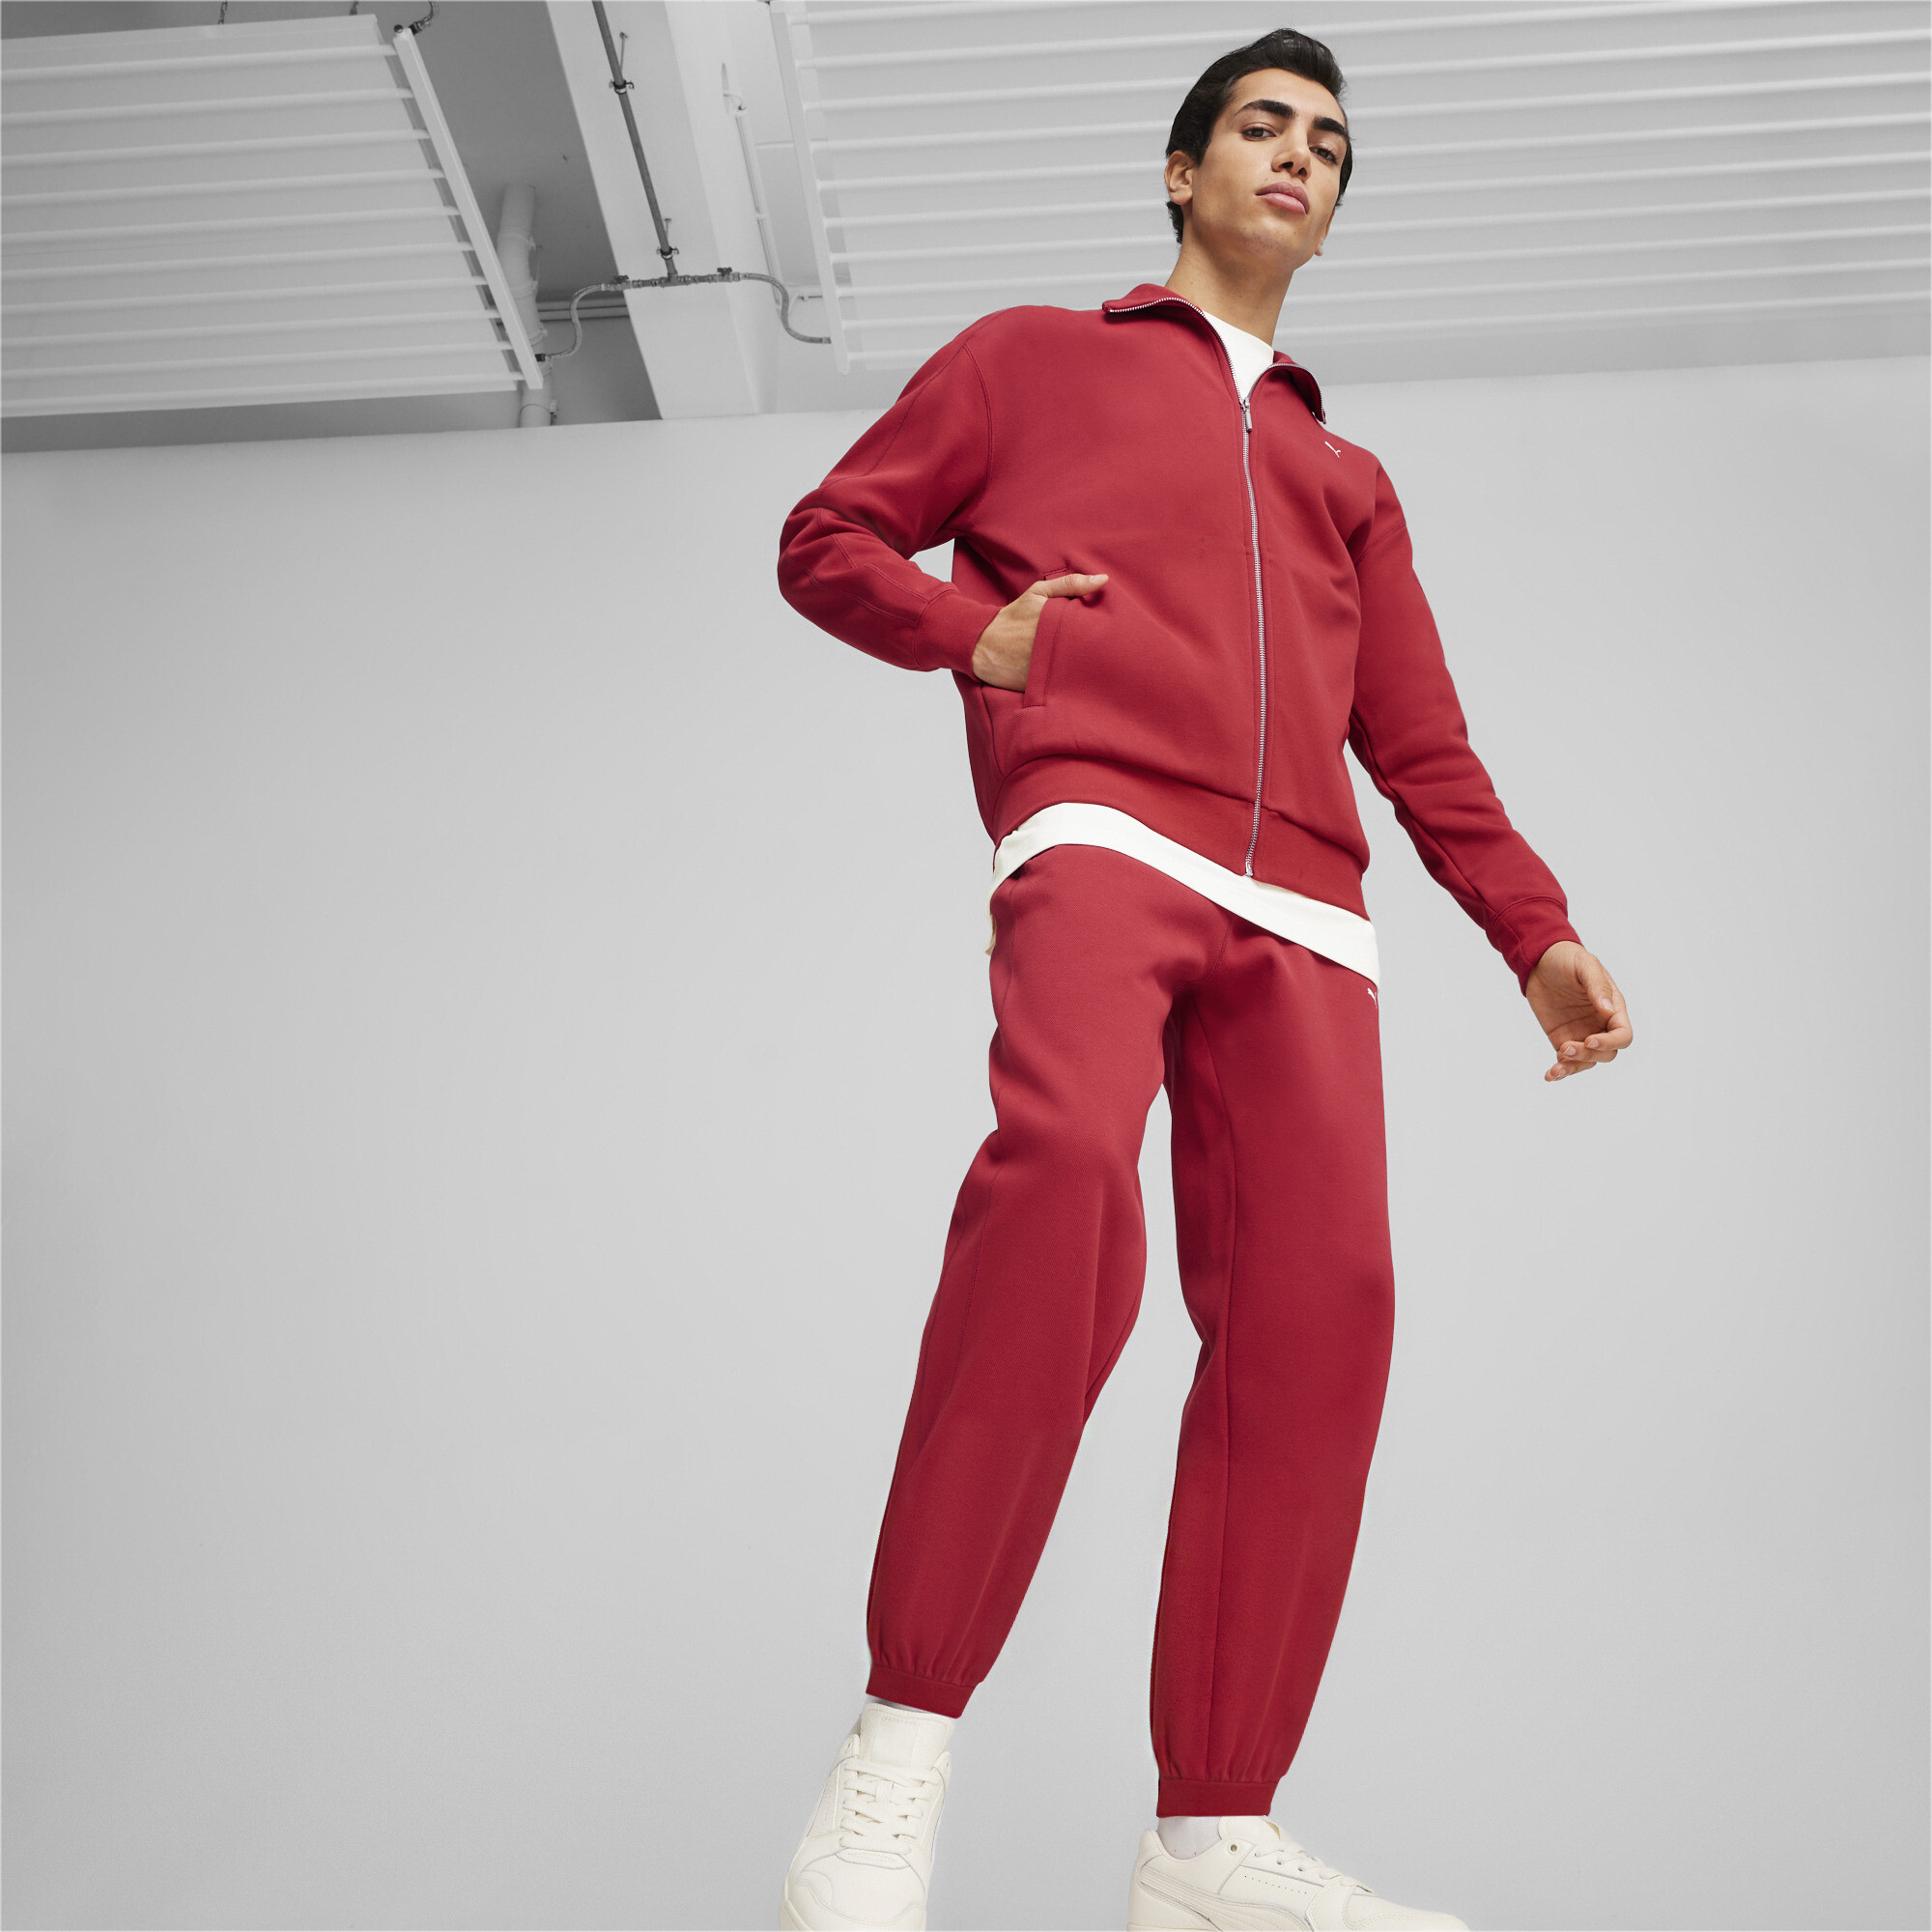 Men's Puma MMQ T7 Track Jacket, Red, Size XL, Clothing